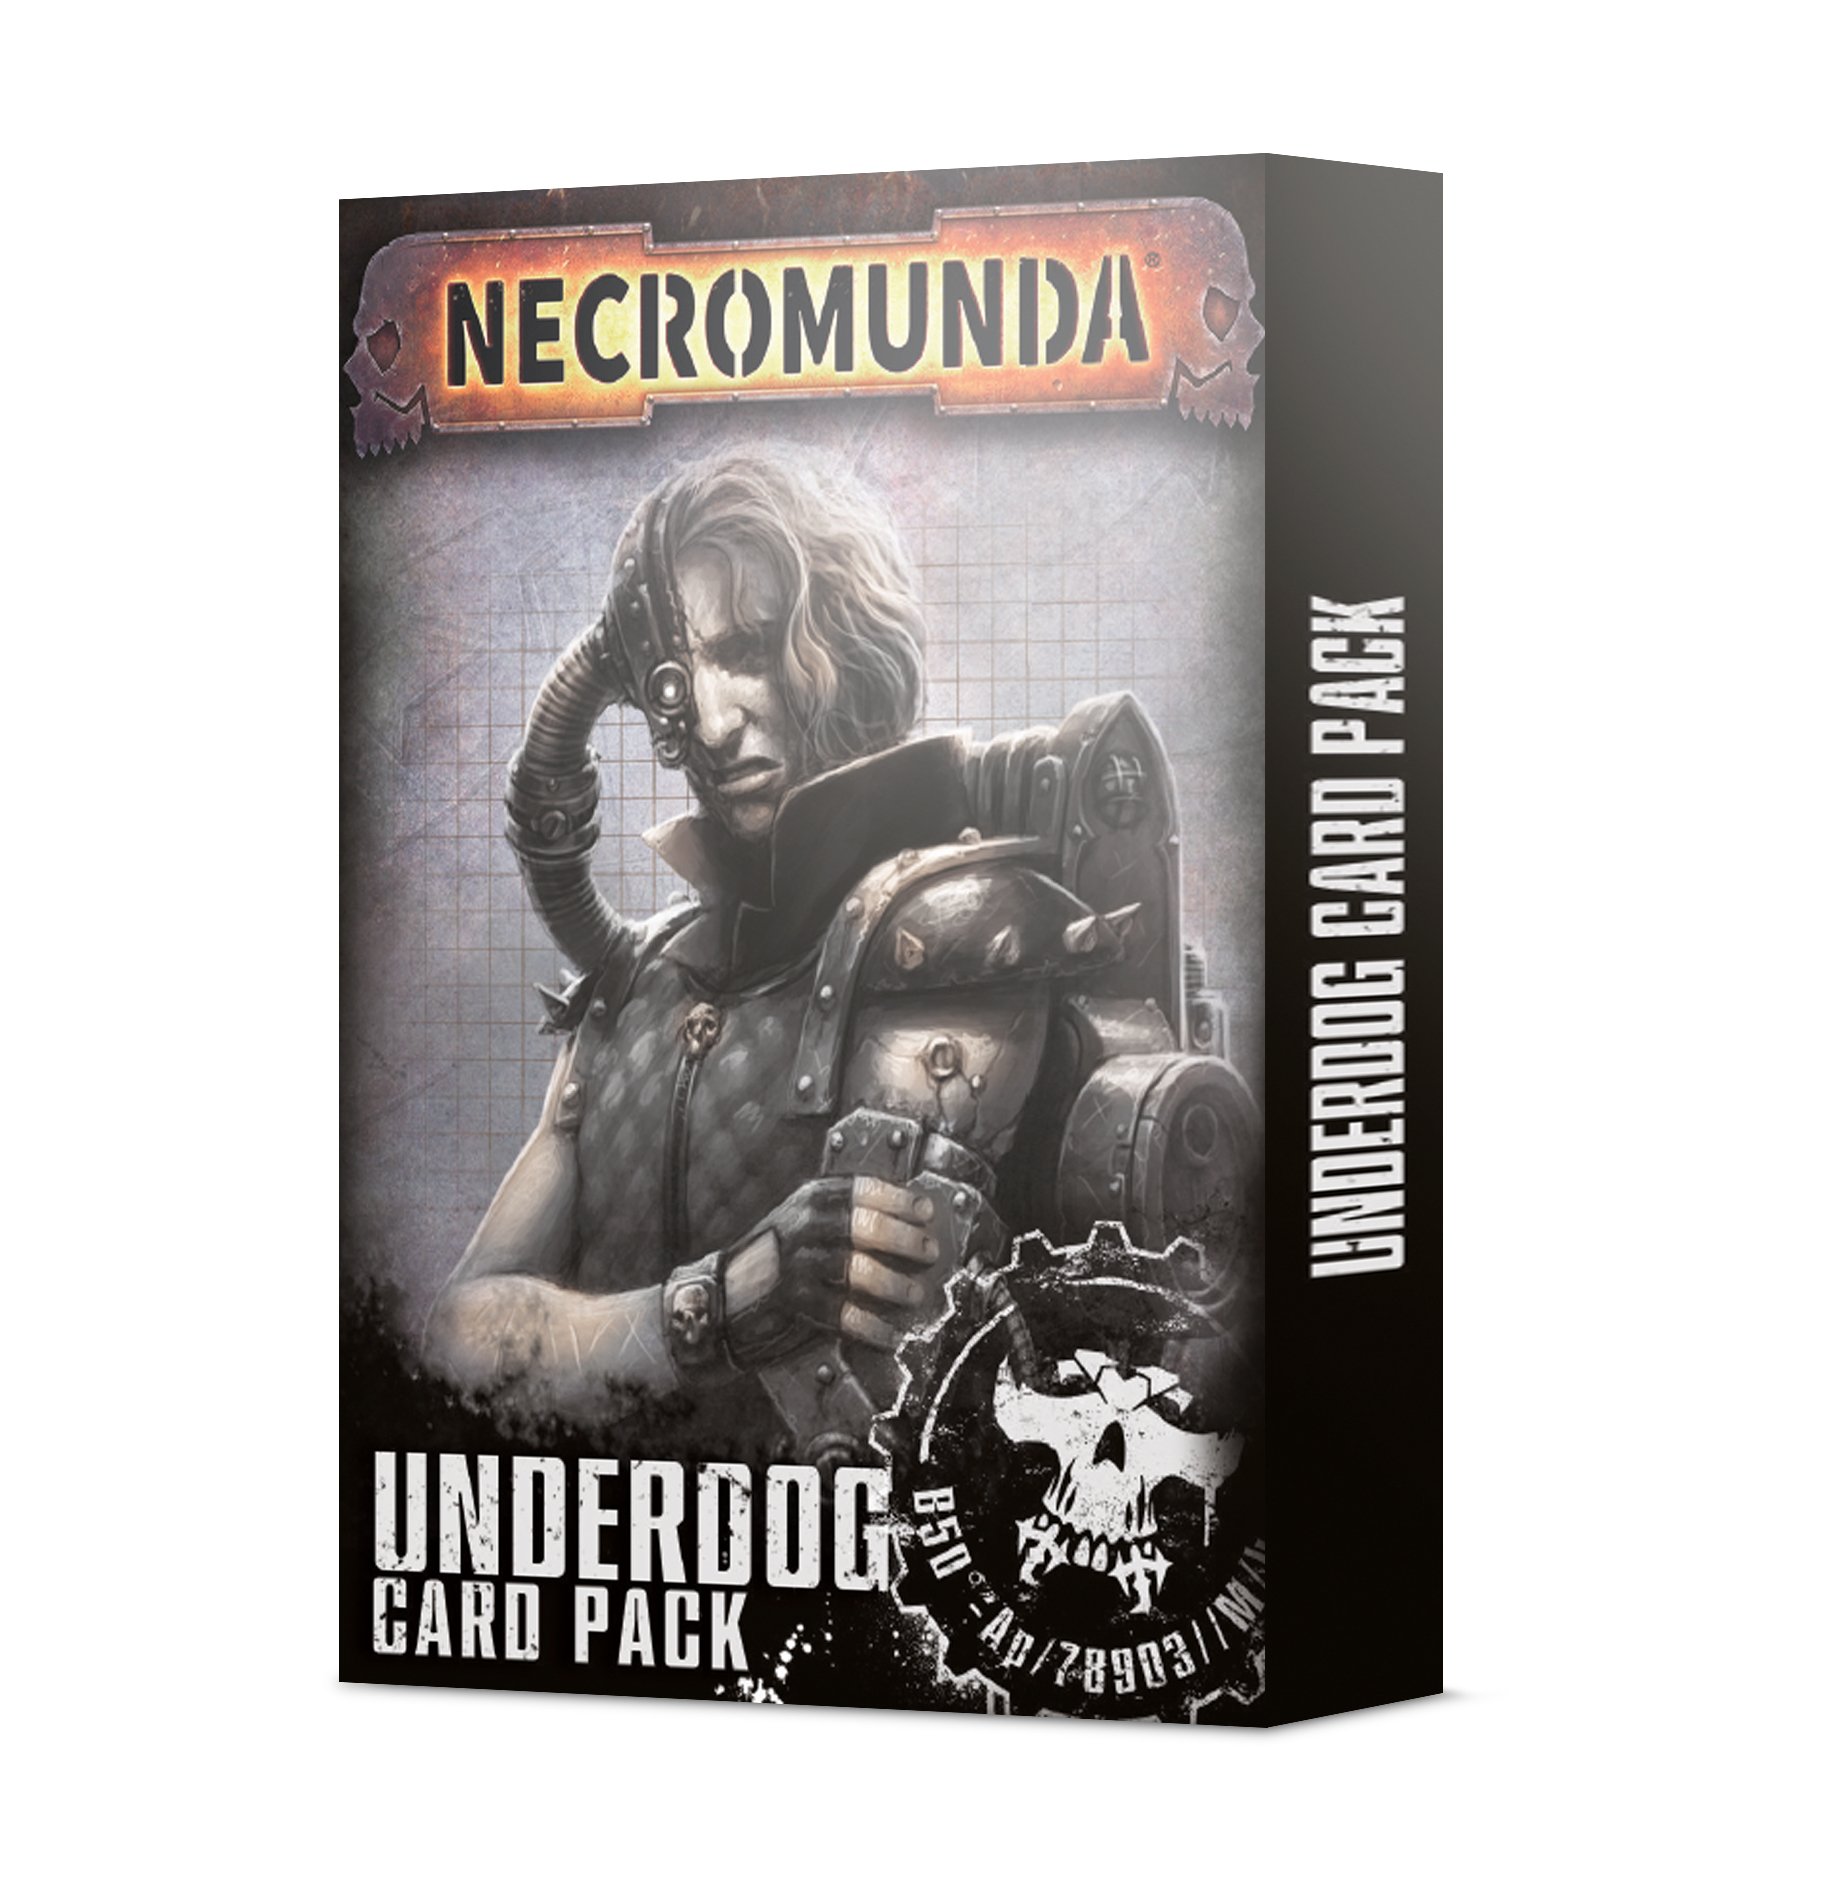 Necromunda: Underdog Card Pack (Jan 29th) 